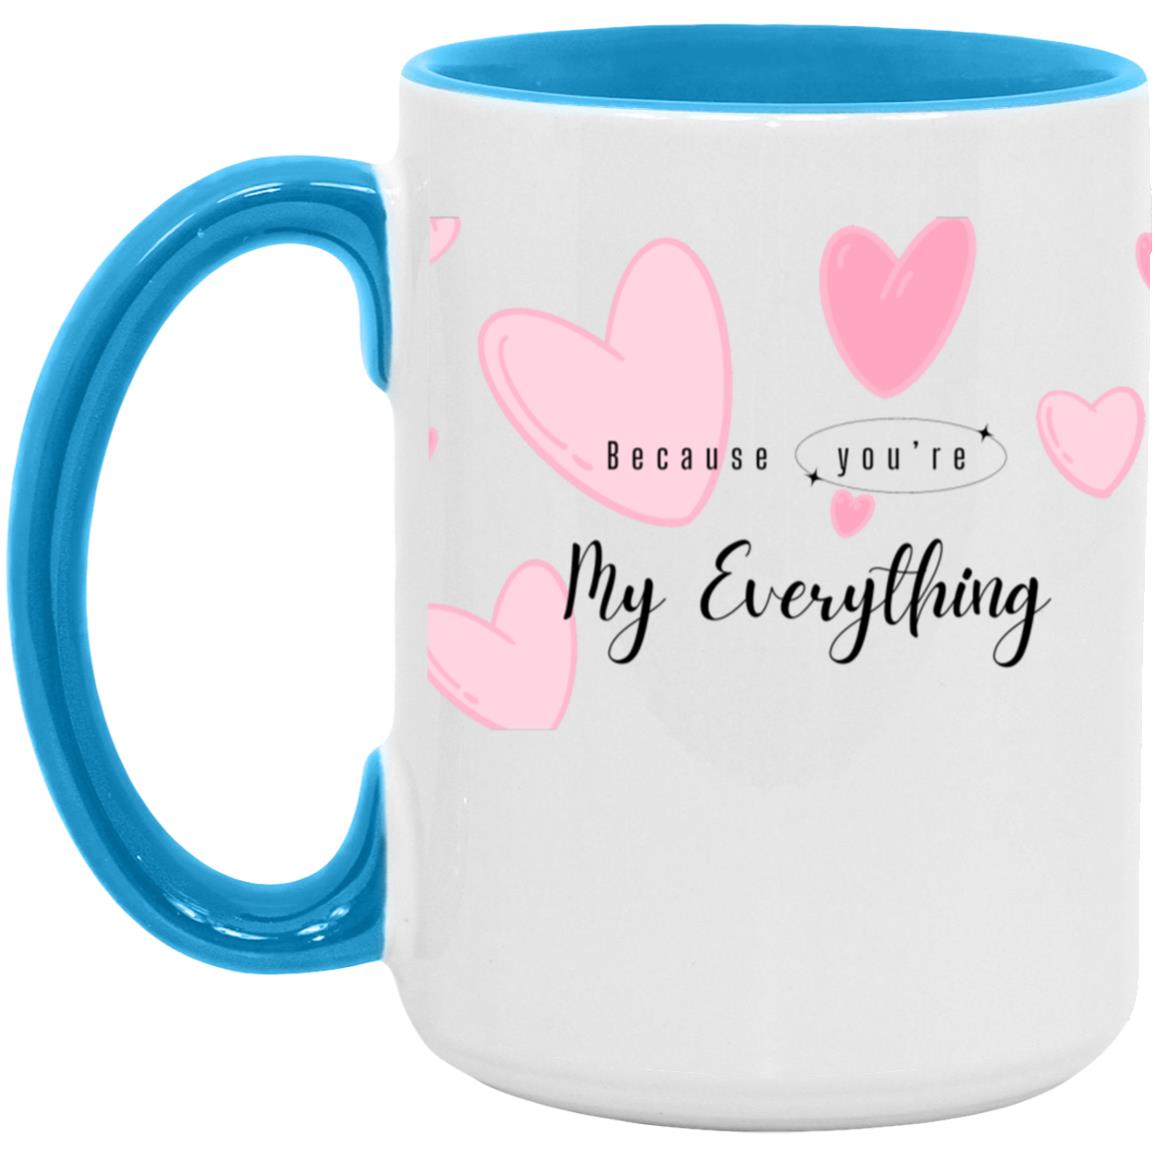 You're My Everything Valentine's Day Love Mug